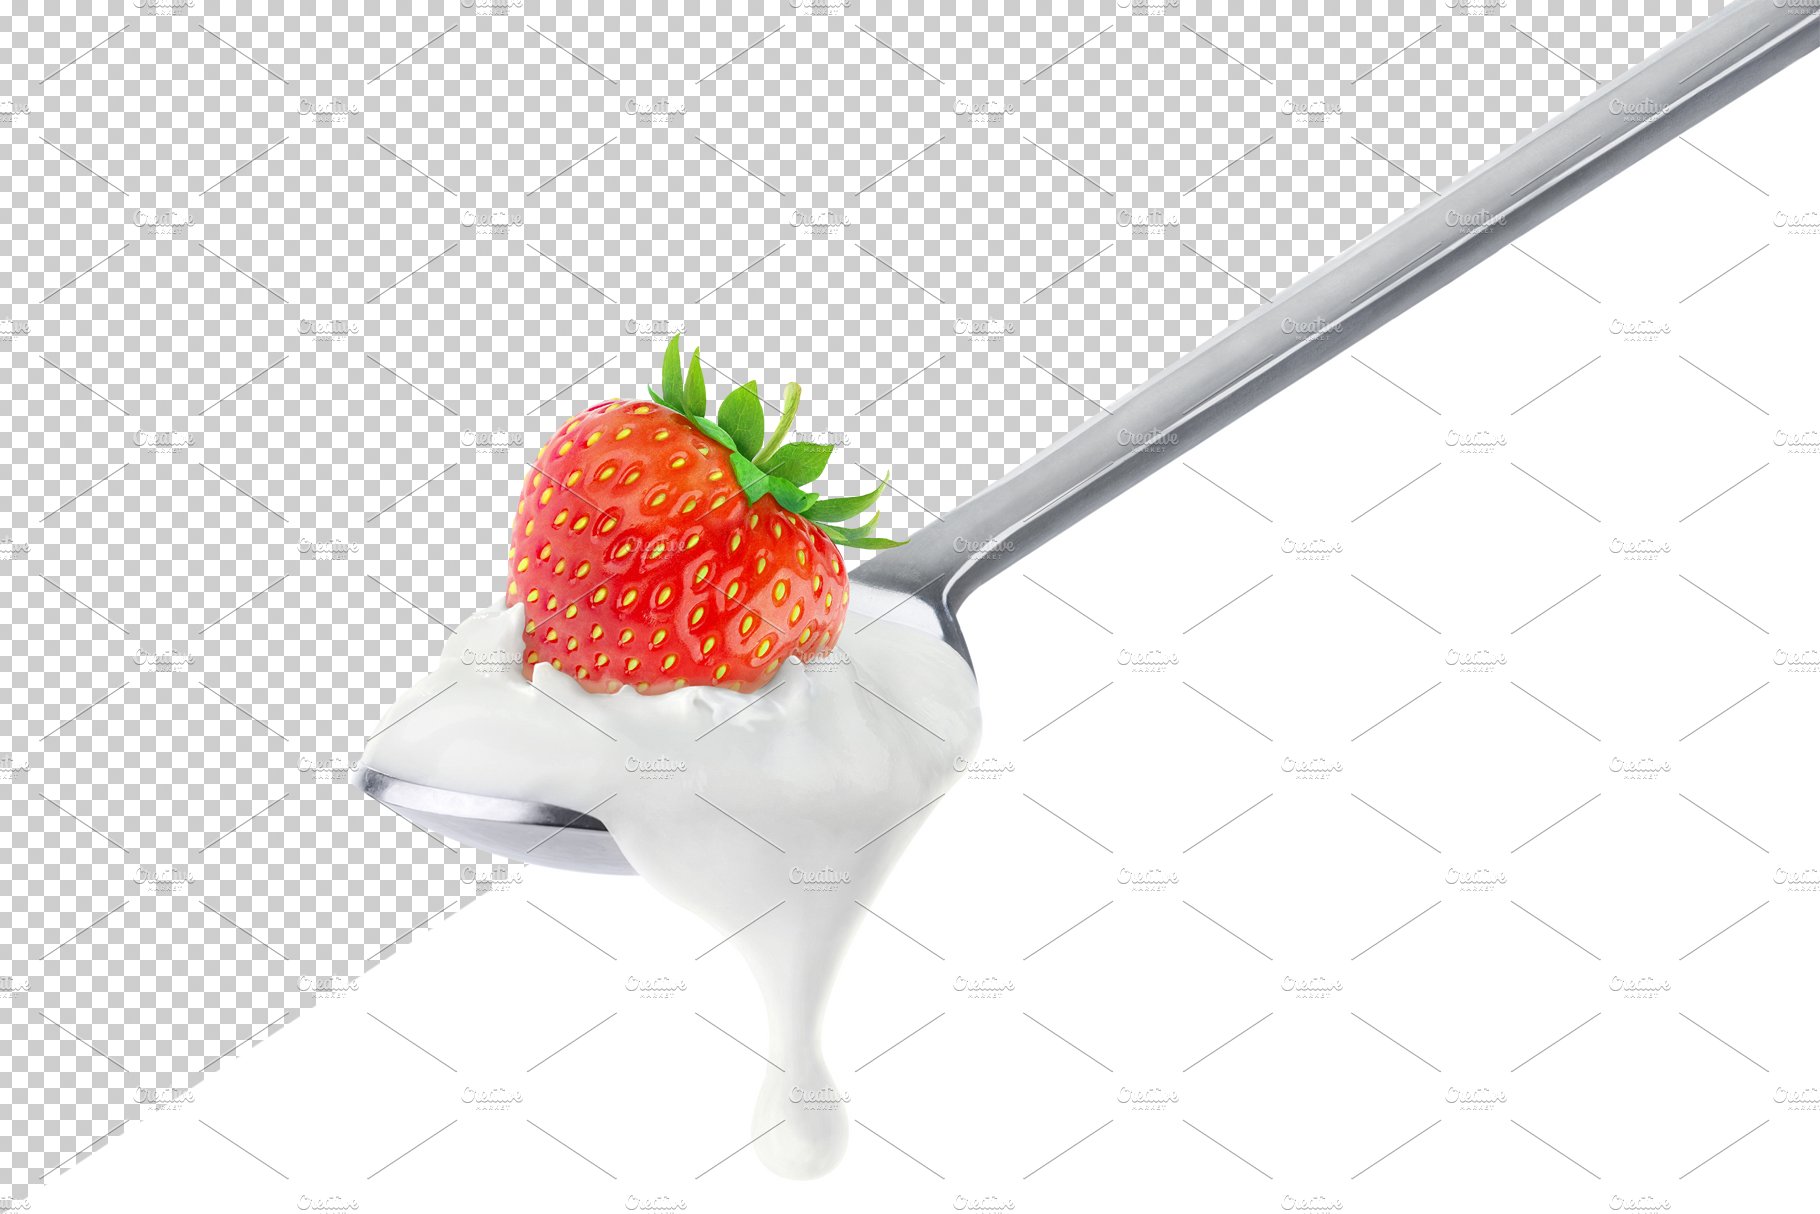 Fruit yogurt on spoons preview image.